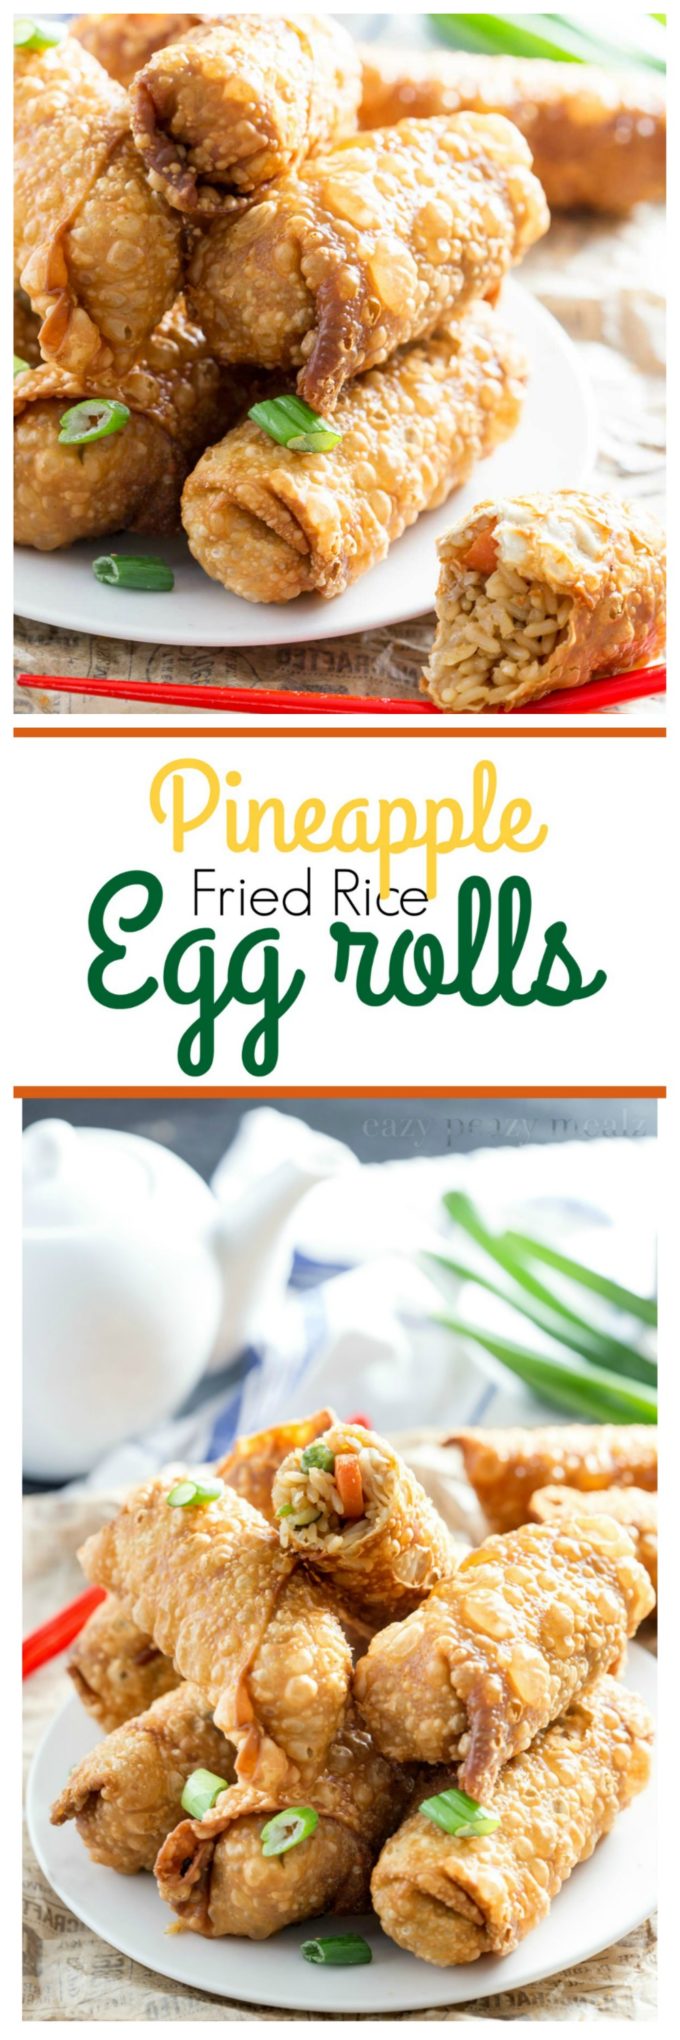 Chicken Fried Rice Egg Rolls Recipe 